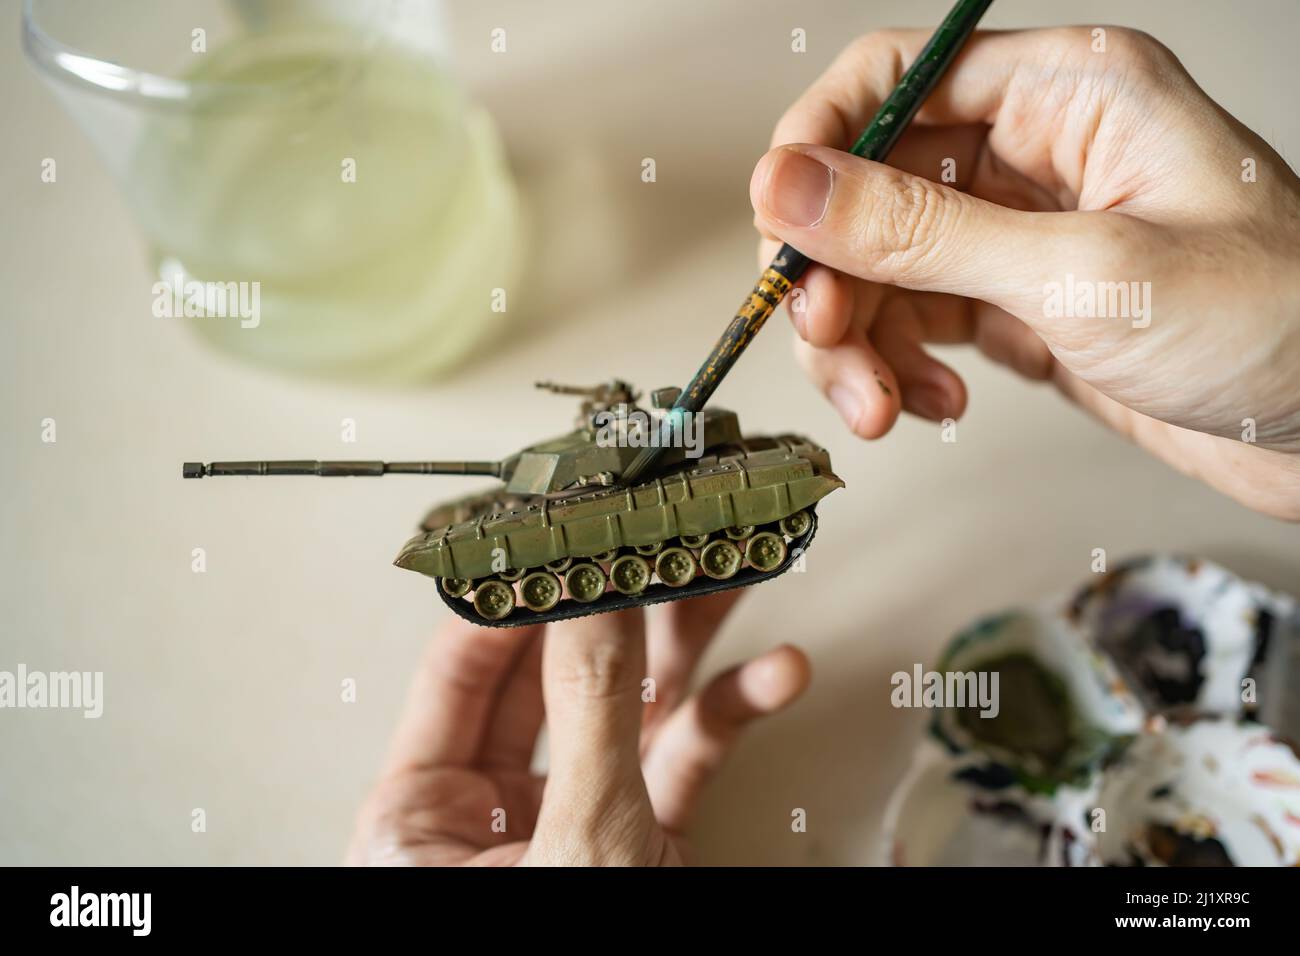 Painting tank plastic model with brush Stock Photo